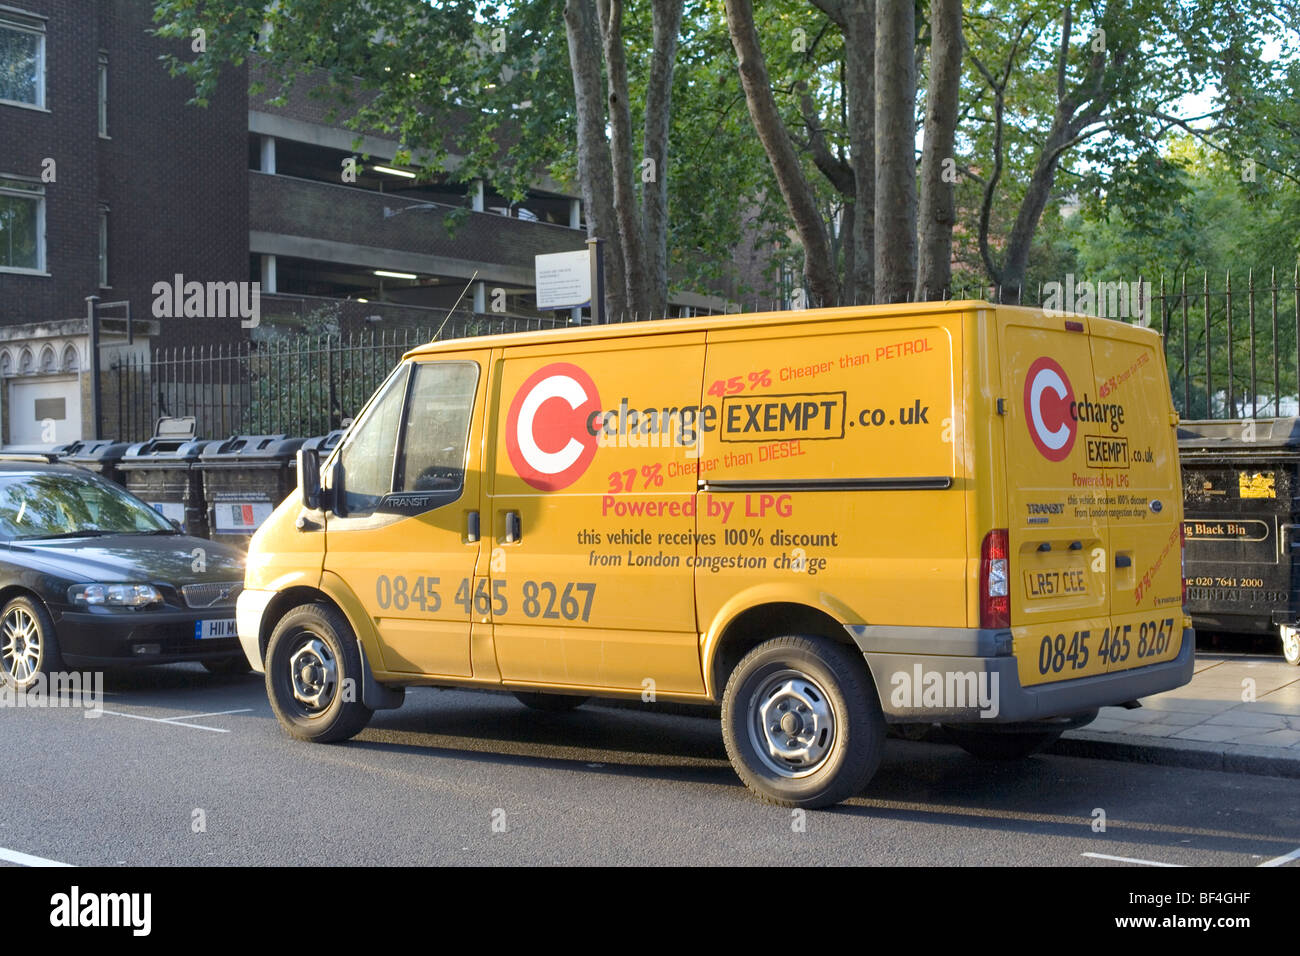 Congestion charge Exempt LPG van, Central London, England, UK, Europe Stock  Photo - Alamy